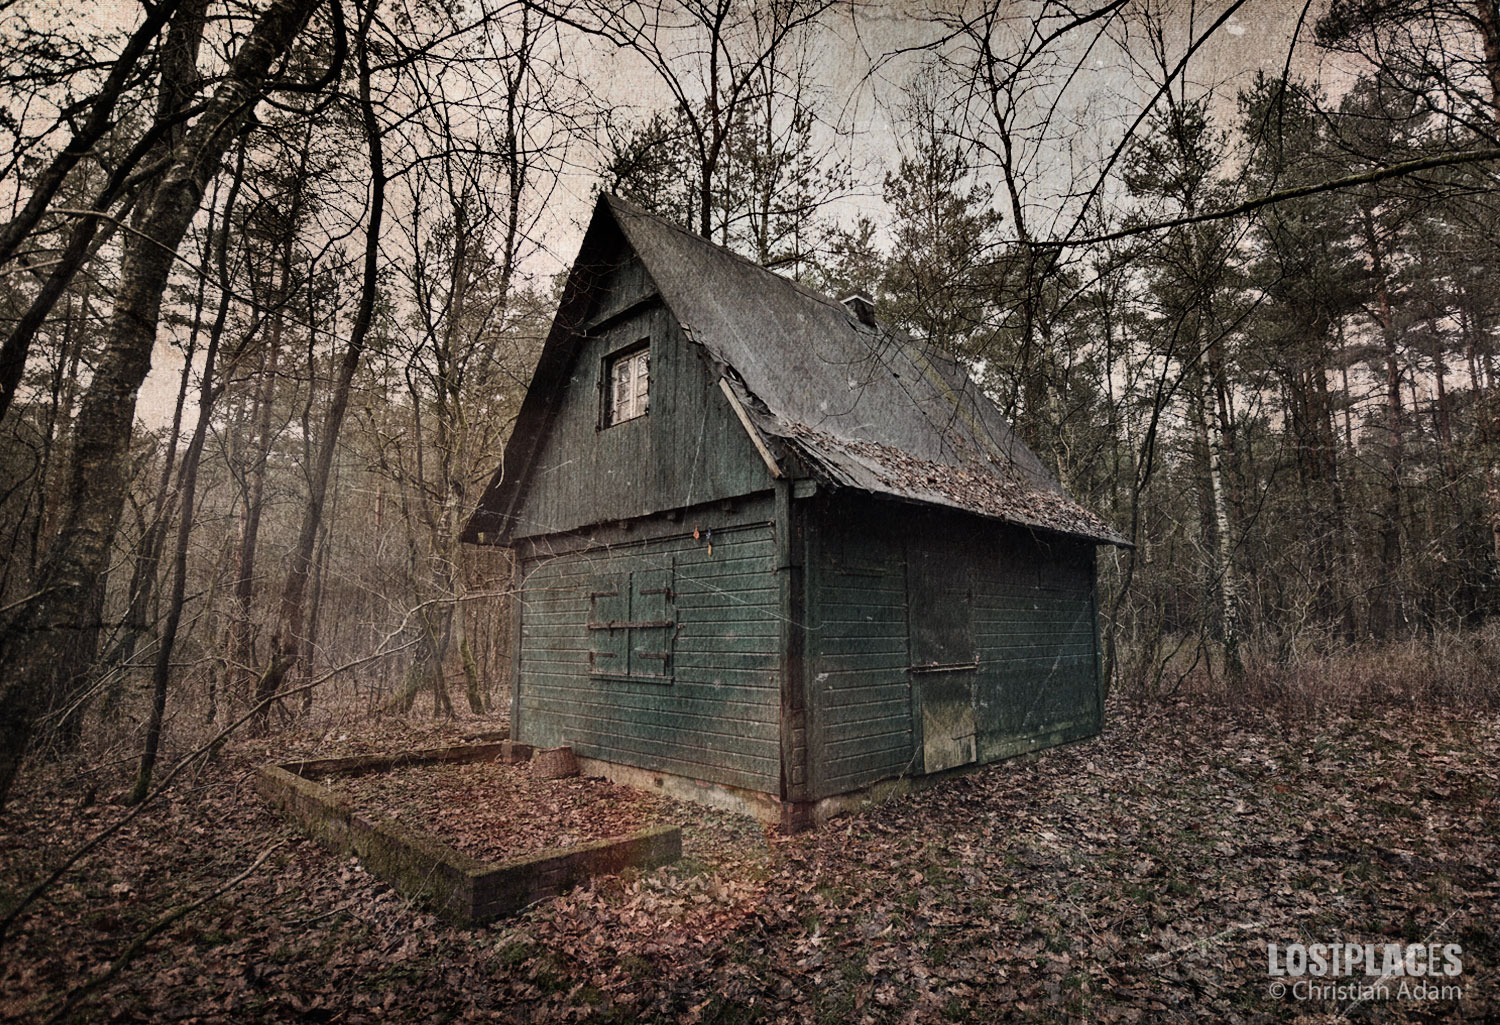 lostplaces - vergessene orte: Das Haus im Wald